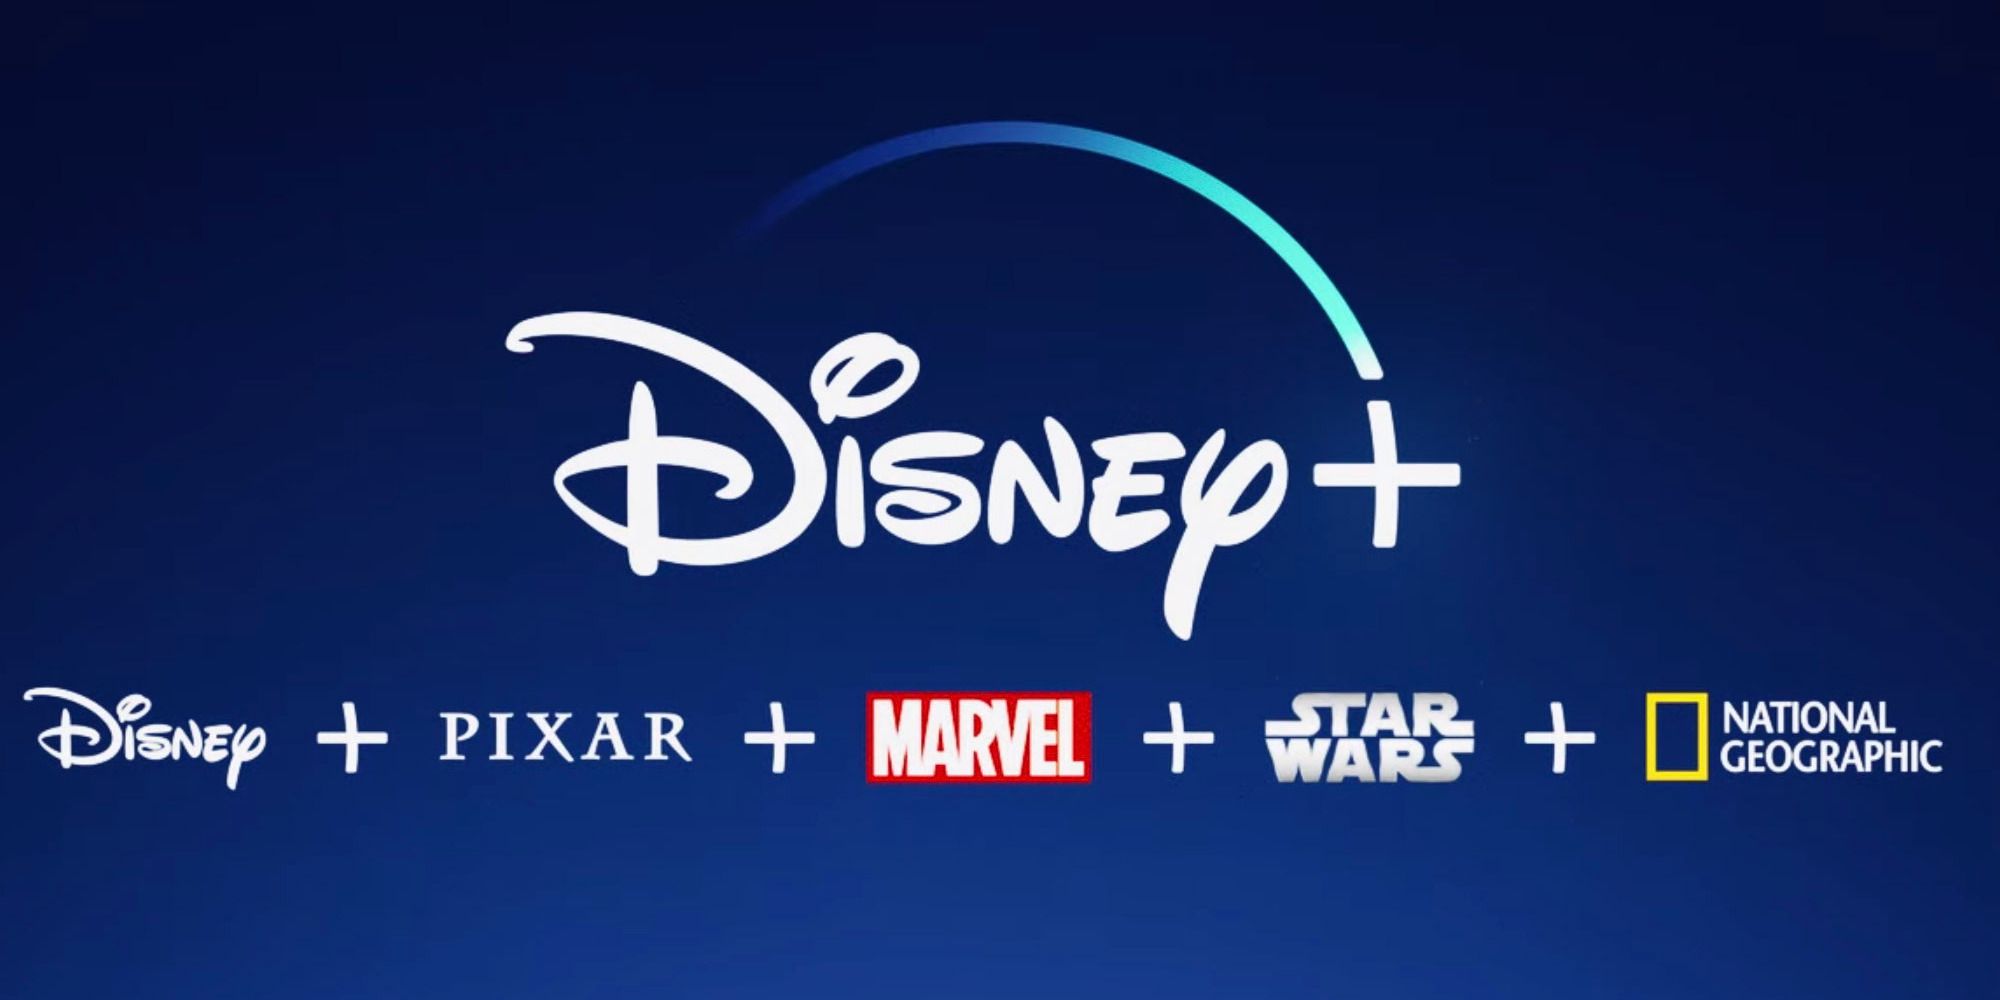 Disney+ Logo What Disney+ Owns What Content Is Popular.jpg